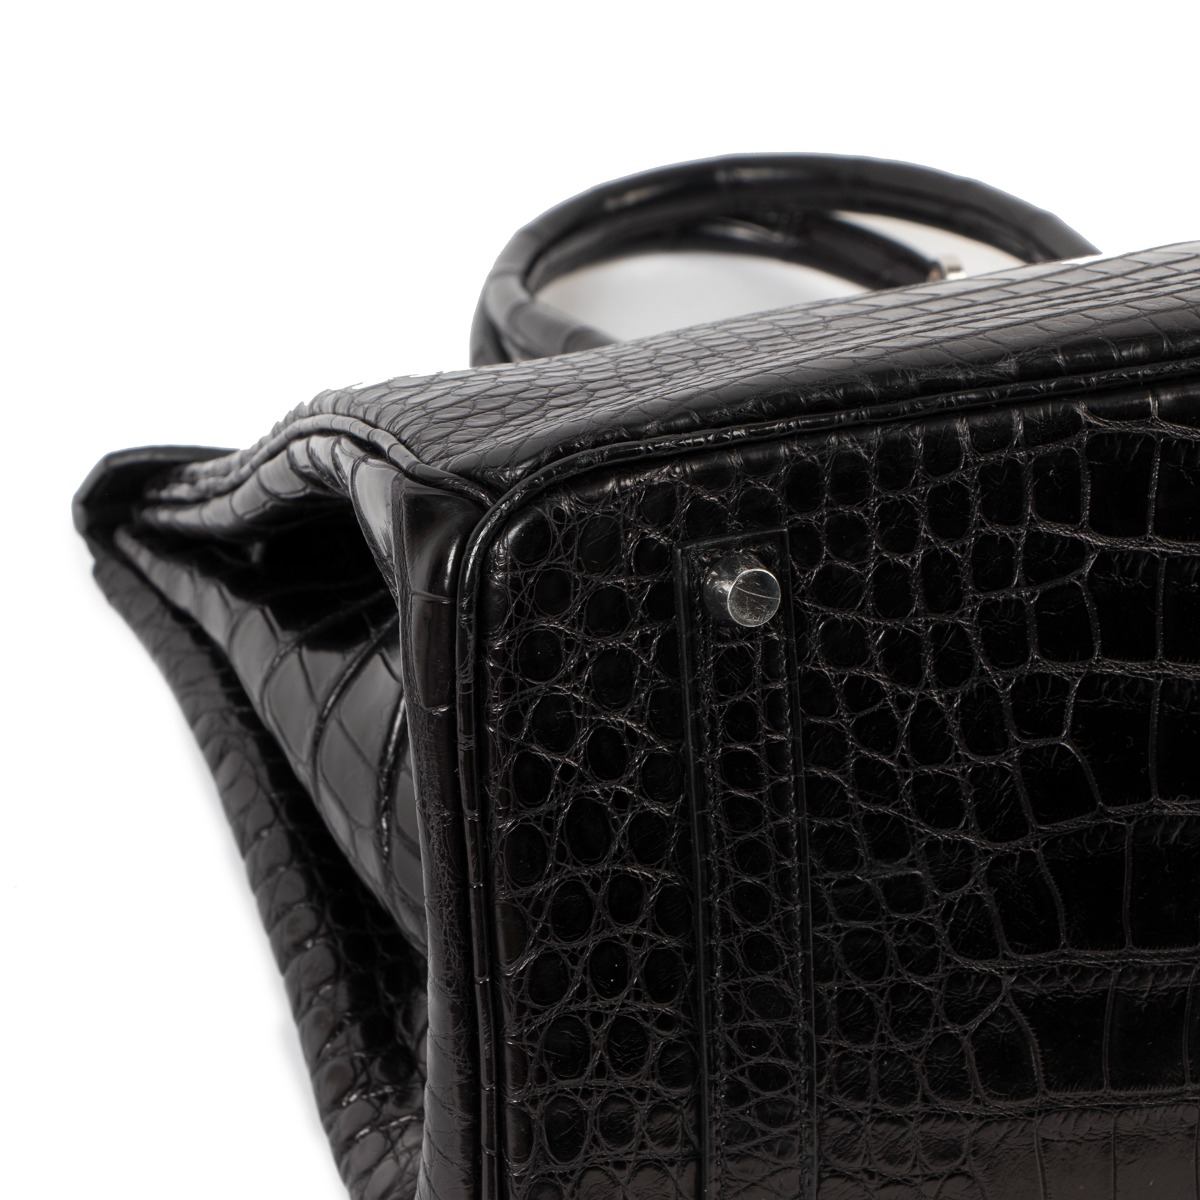 Hermès Birkin 35 Alligator Beton Bag PHW